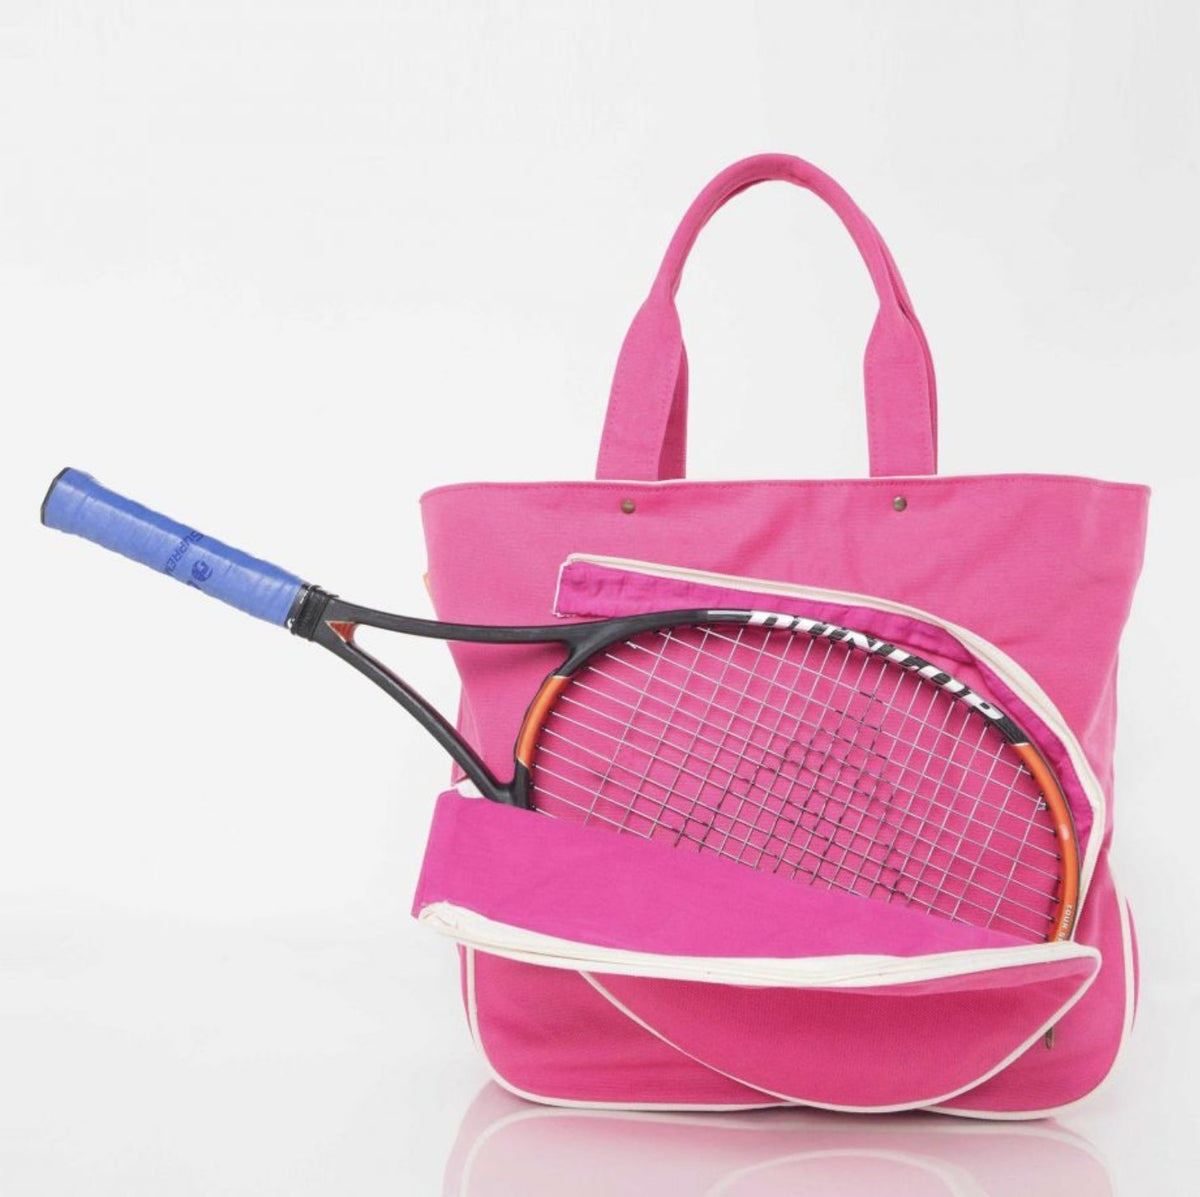 Tennis Bag Tremendous Tennis Tote